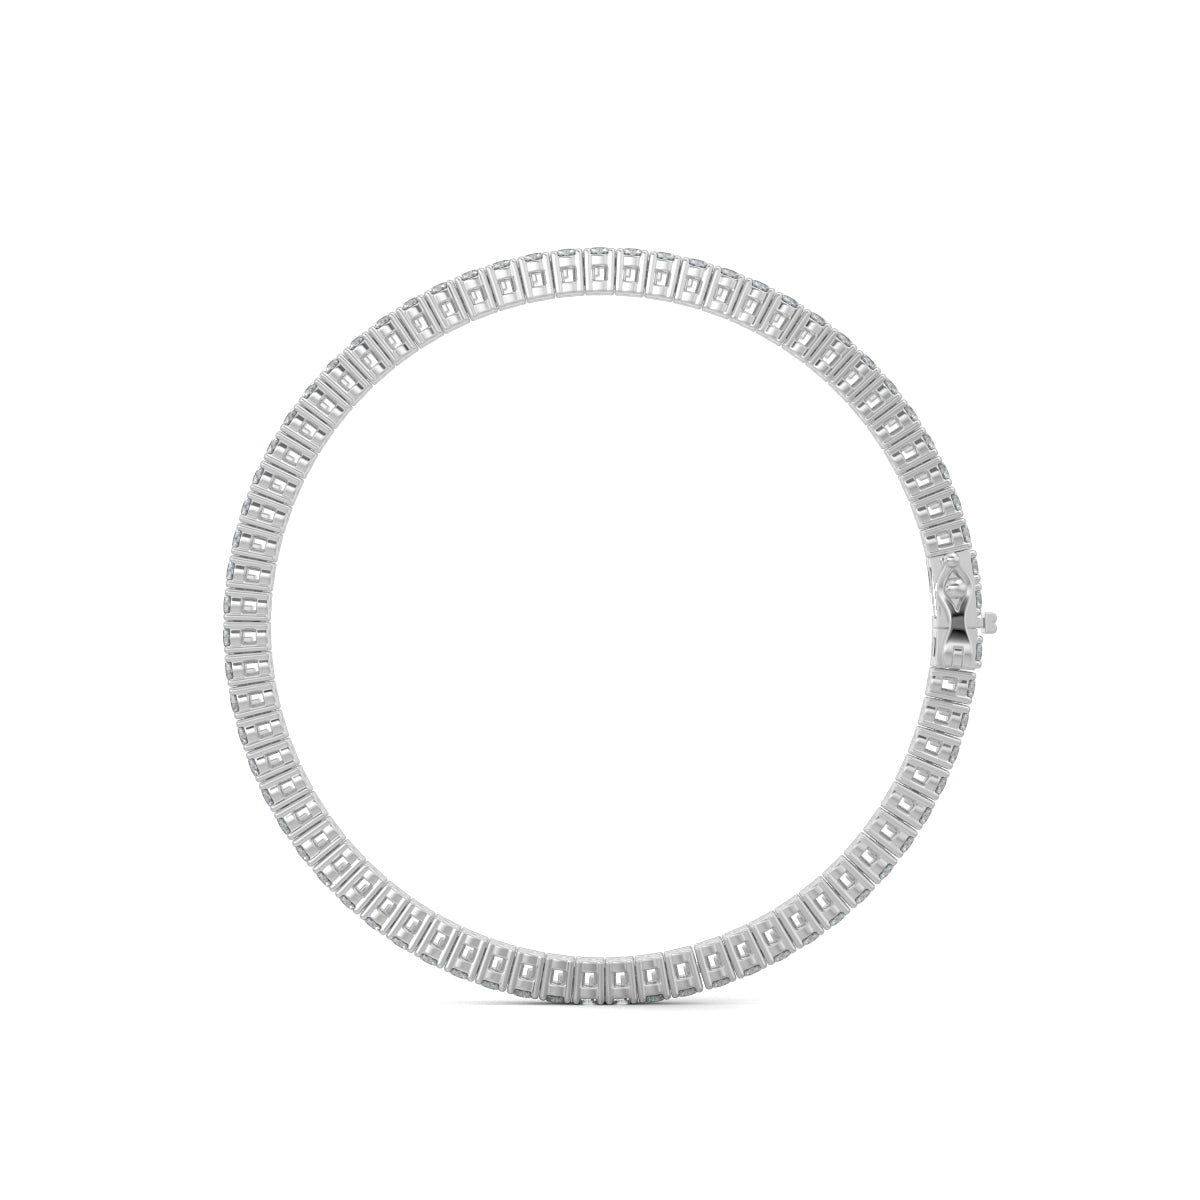 White Gold, Diamond Bracelet, Natural diamond bracelet, Lab-grown diamond bracelet, 15-Pointer Tennis Bracelet, tennis bracelet, prong setting, jewelry